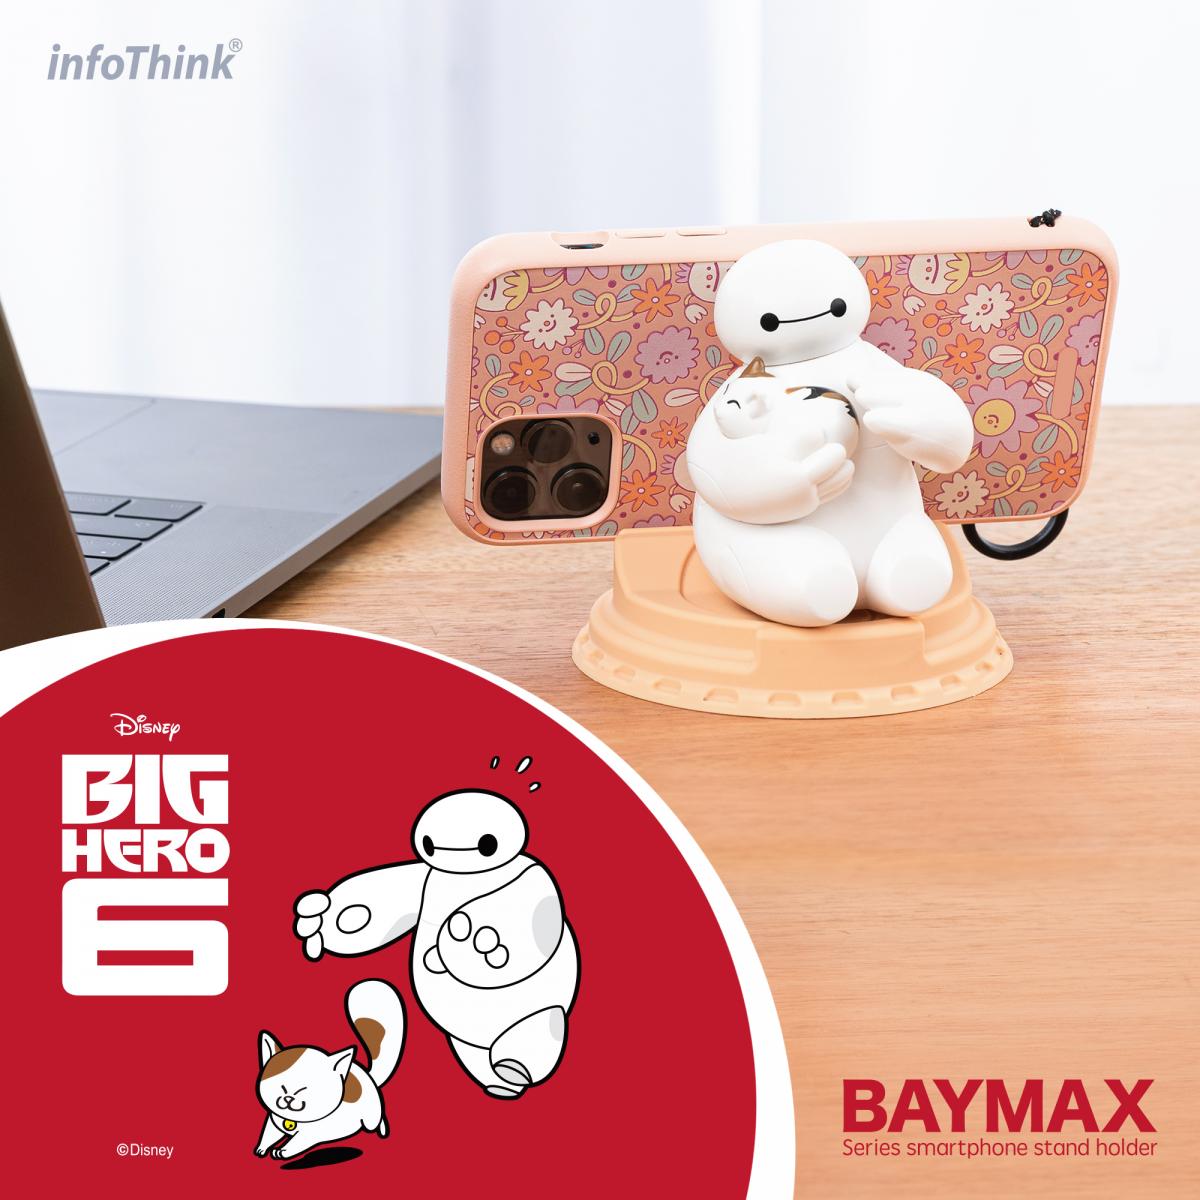 infoThink Baymax Series smartphone stand holder